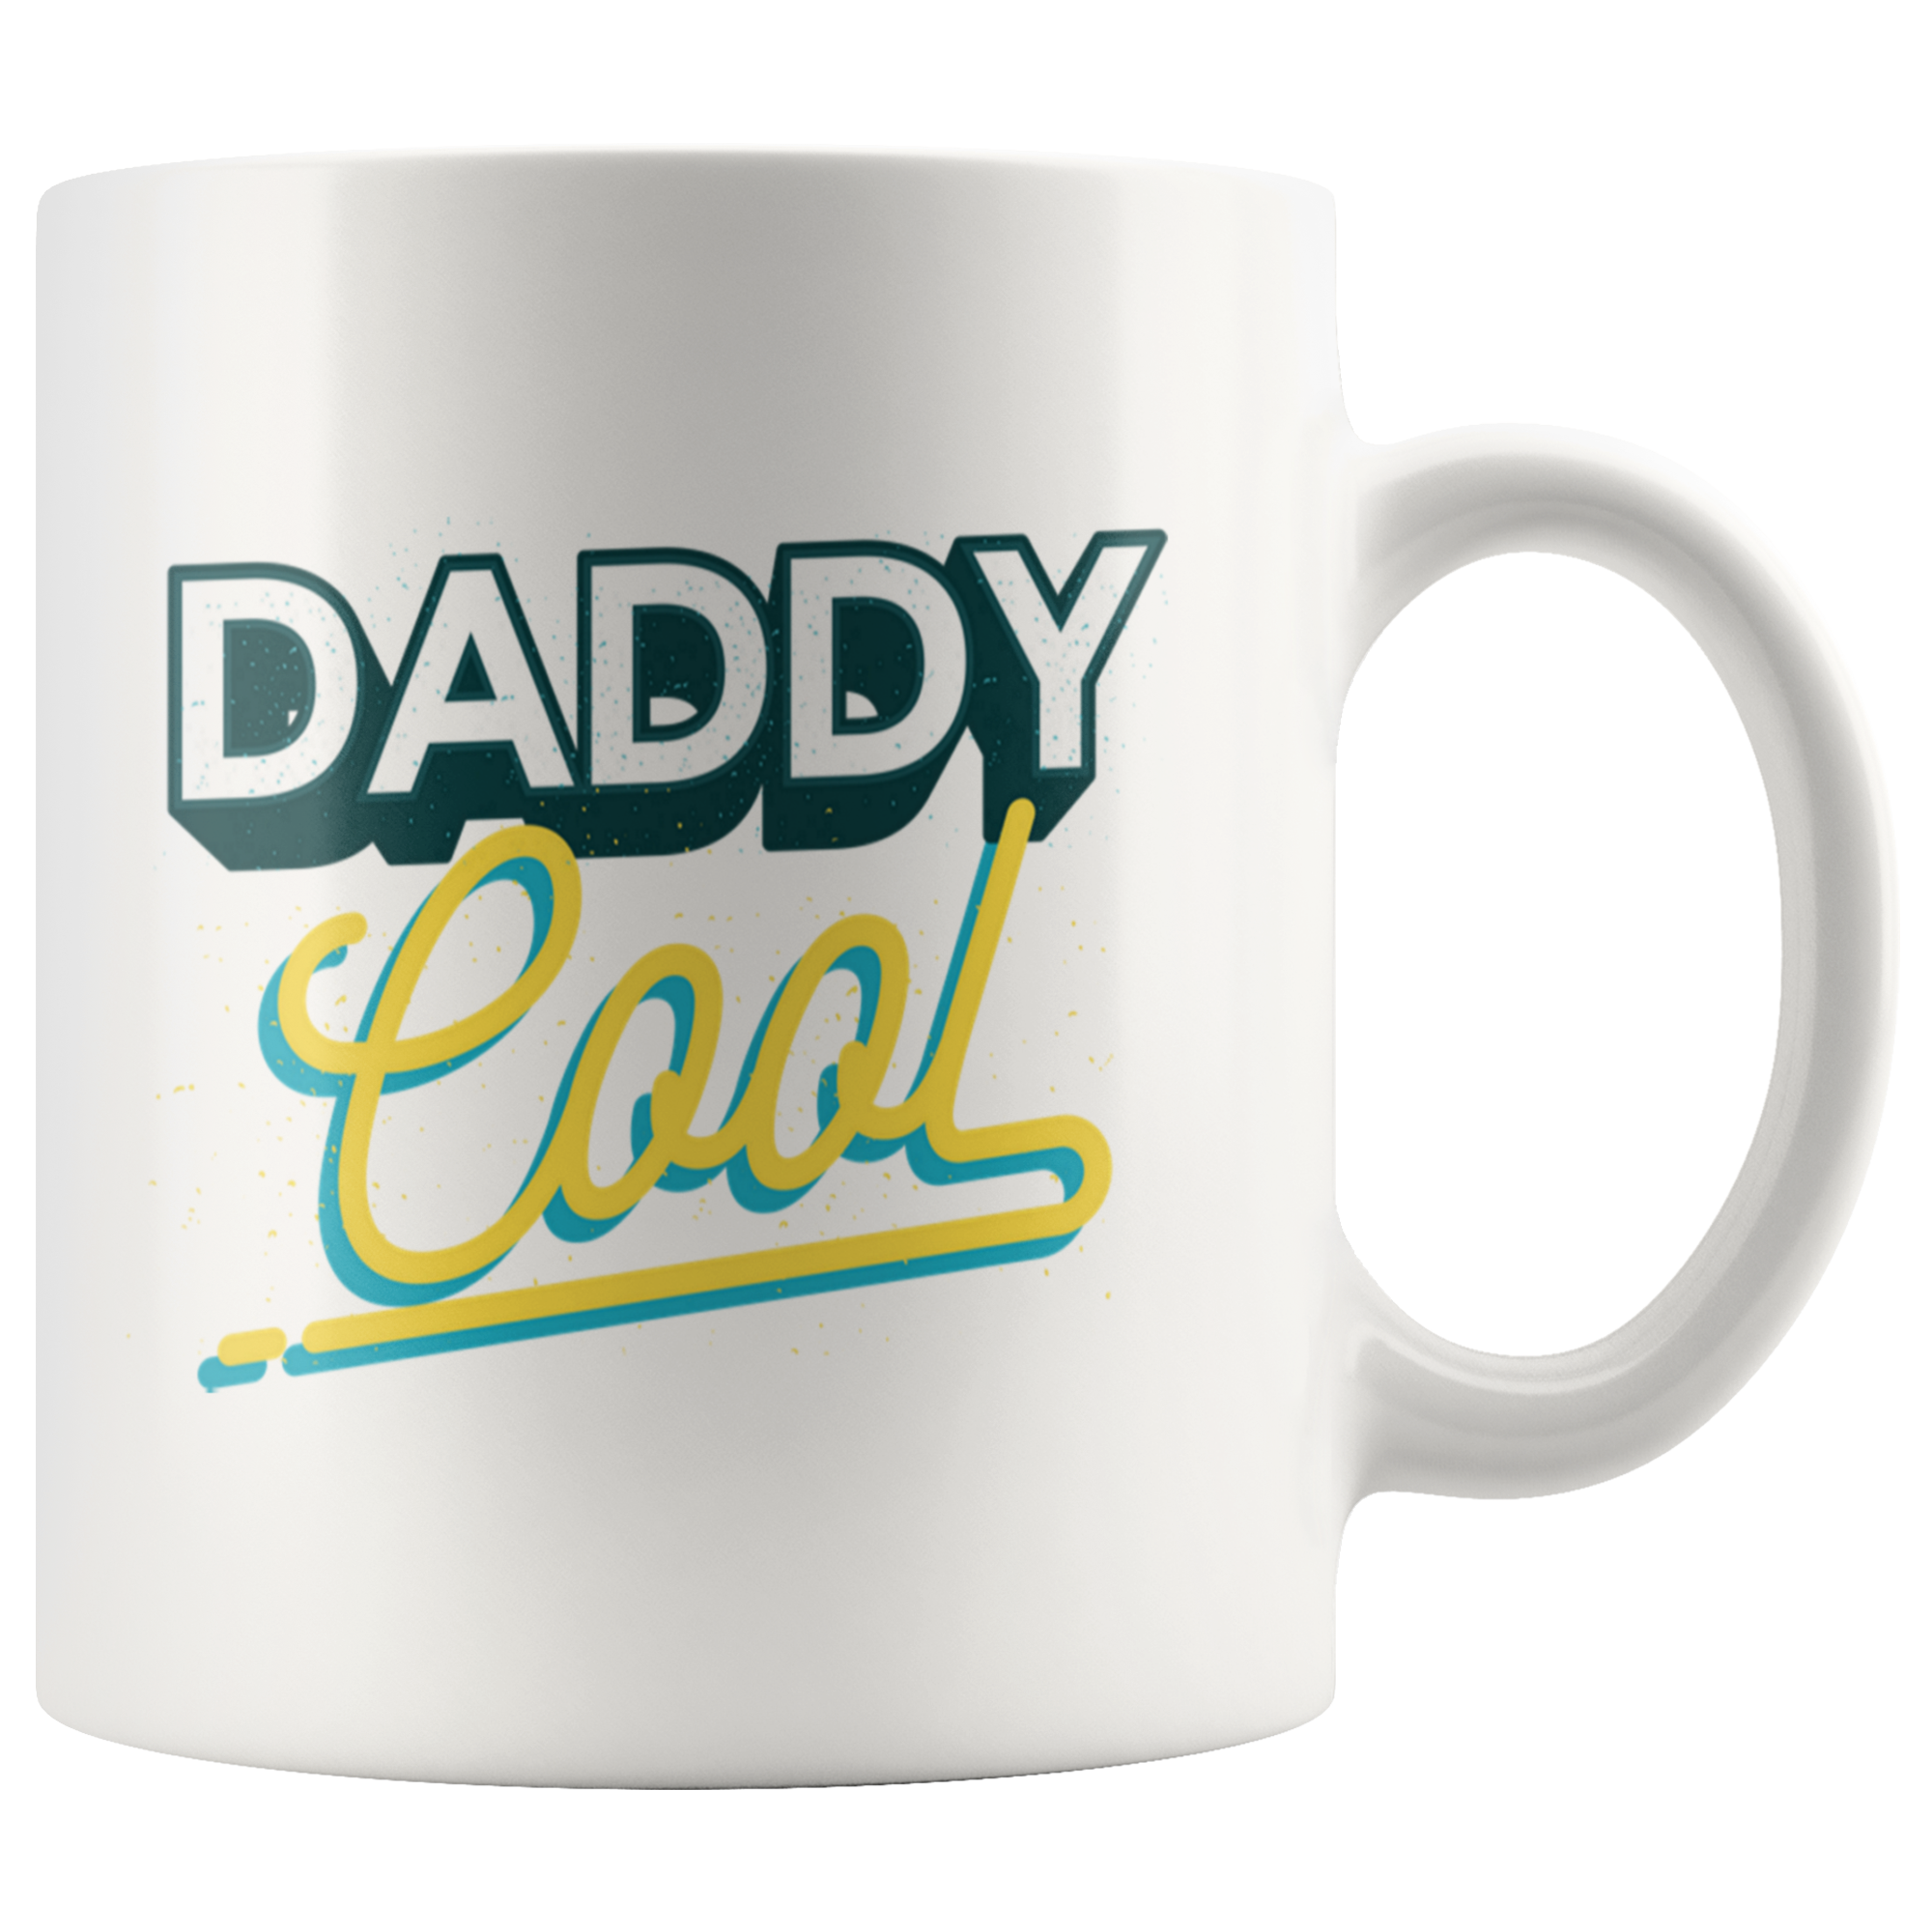 Daddy Cool Mug